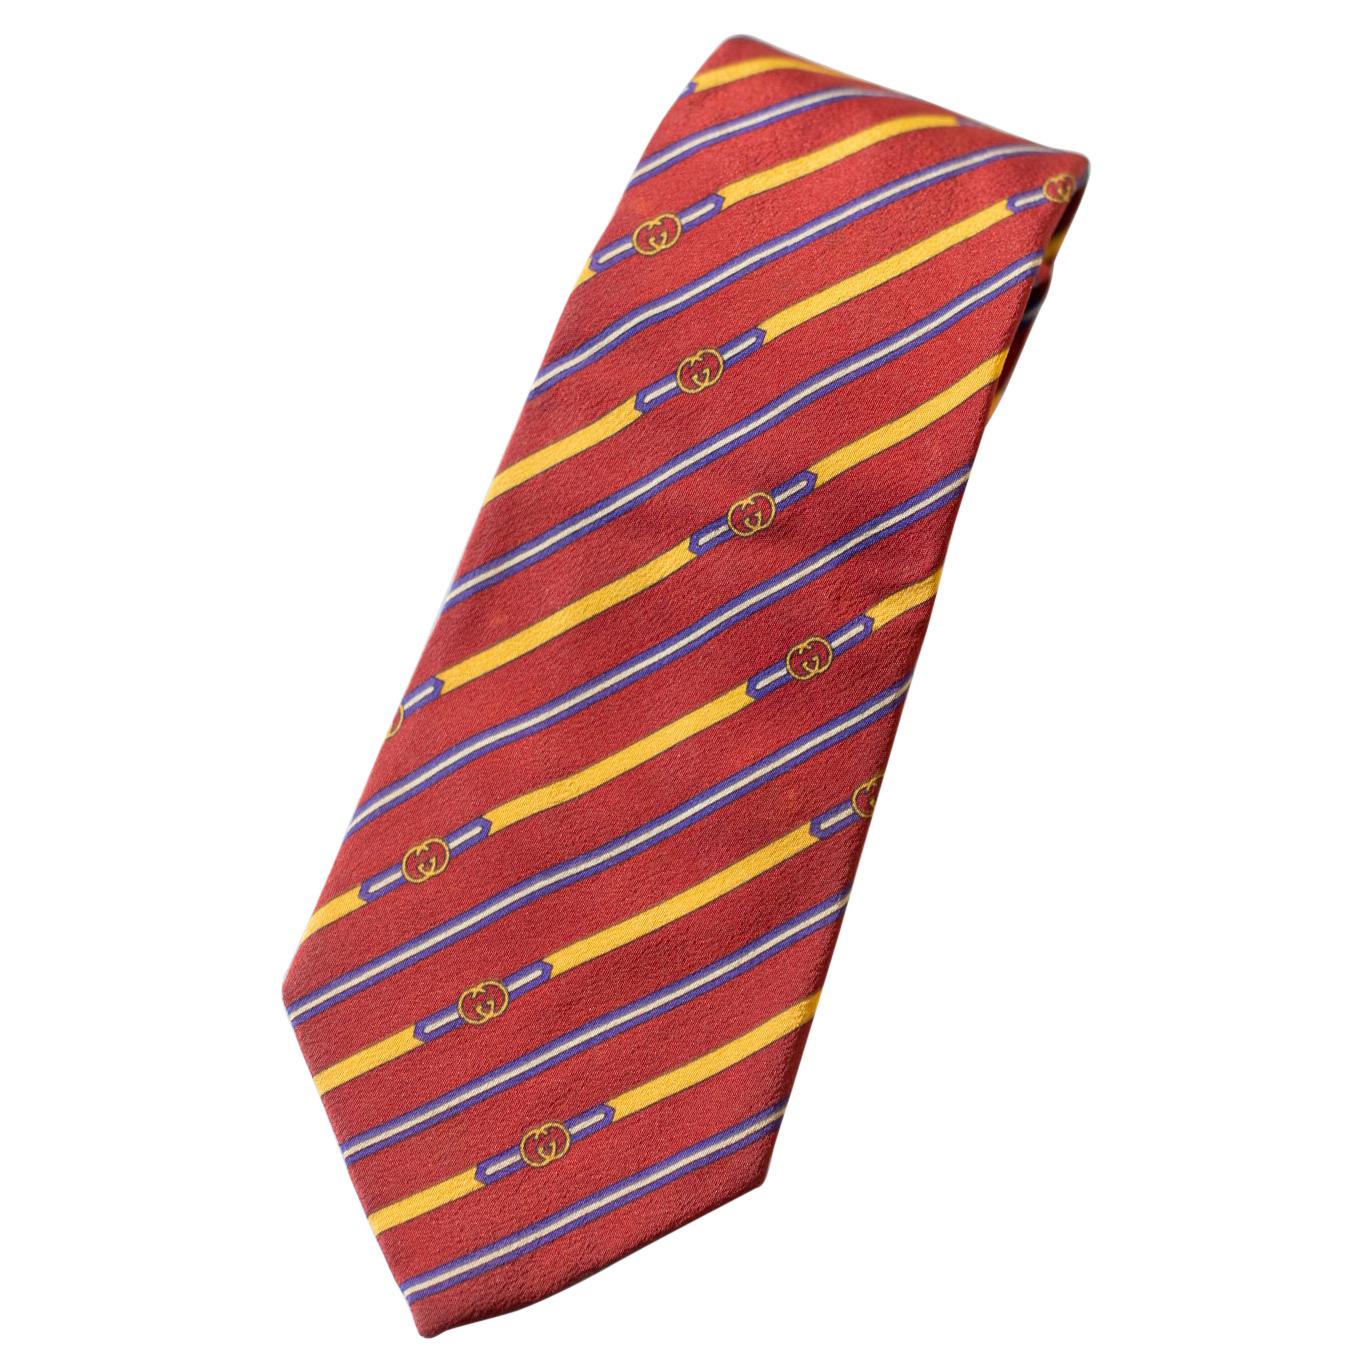 Vintage Gucci red all-silk tie